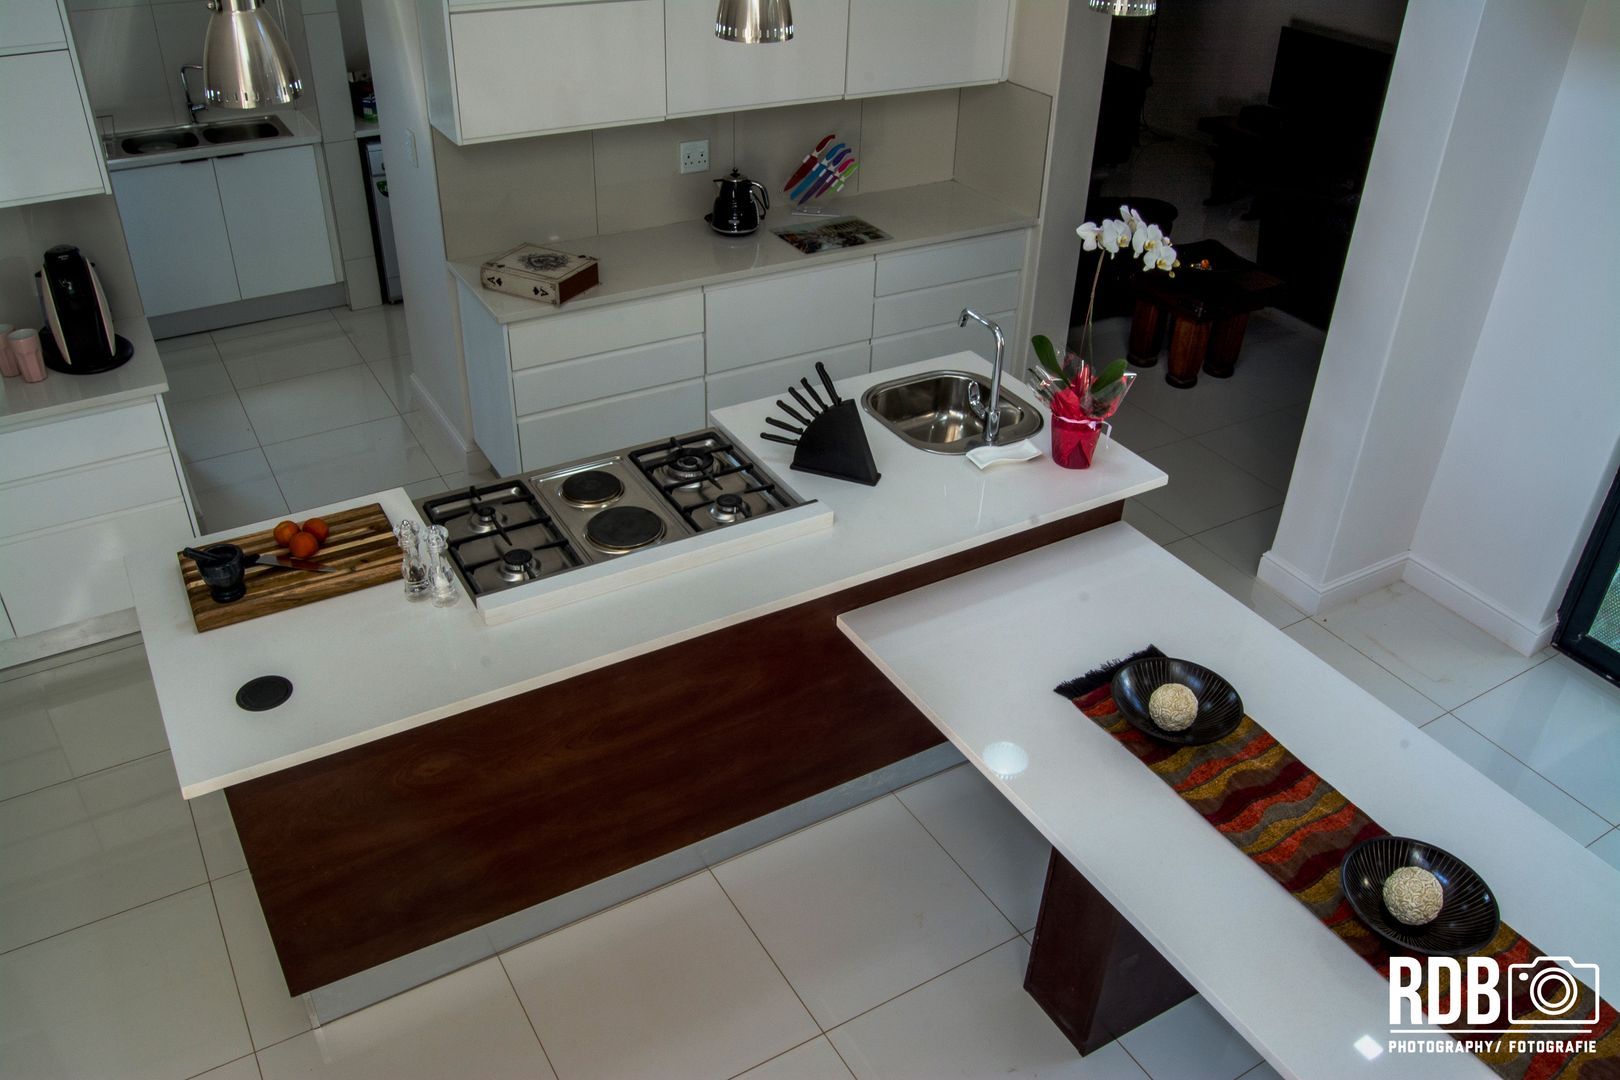 Mr & Mrs Du Plessis Project - The Hills Estate, Pretoria, Ergo Designer Kitchens & Cabinetry Ergo Designer Kitchens & Cabinetry Modern kitchen Wood Wood effect